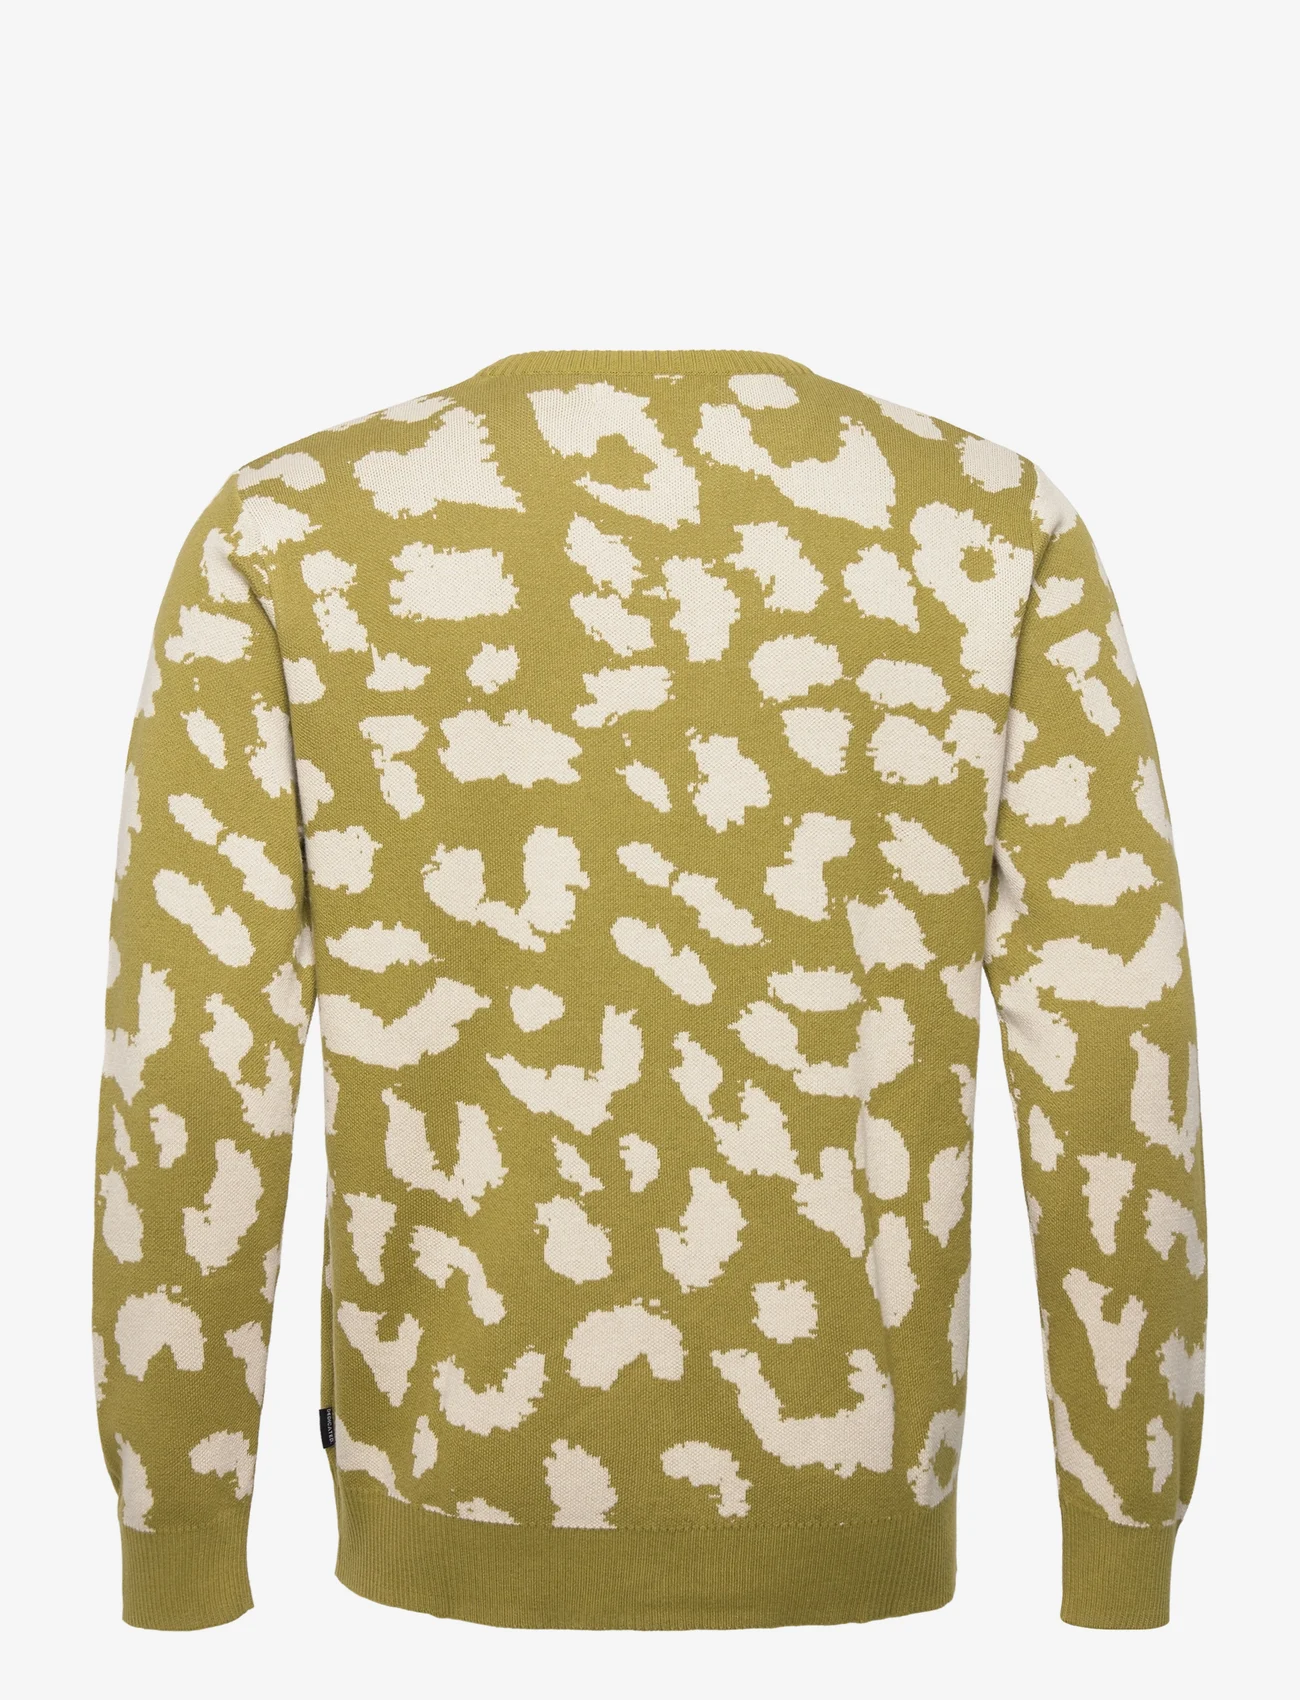 DEDICATED - Sweater Mora Leopard - megztiniai su apvalios formos apykakle - green moss - 1